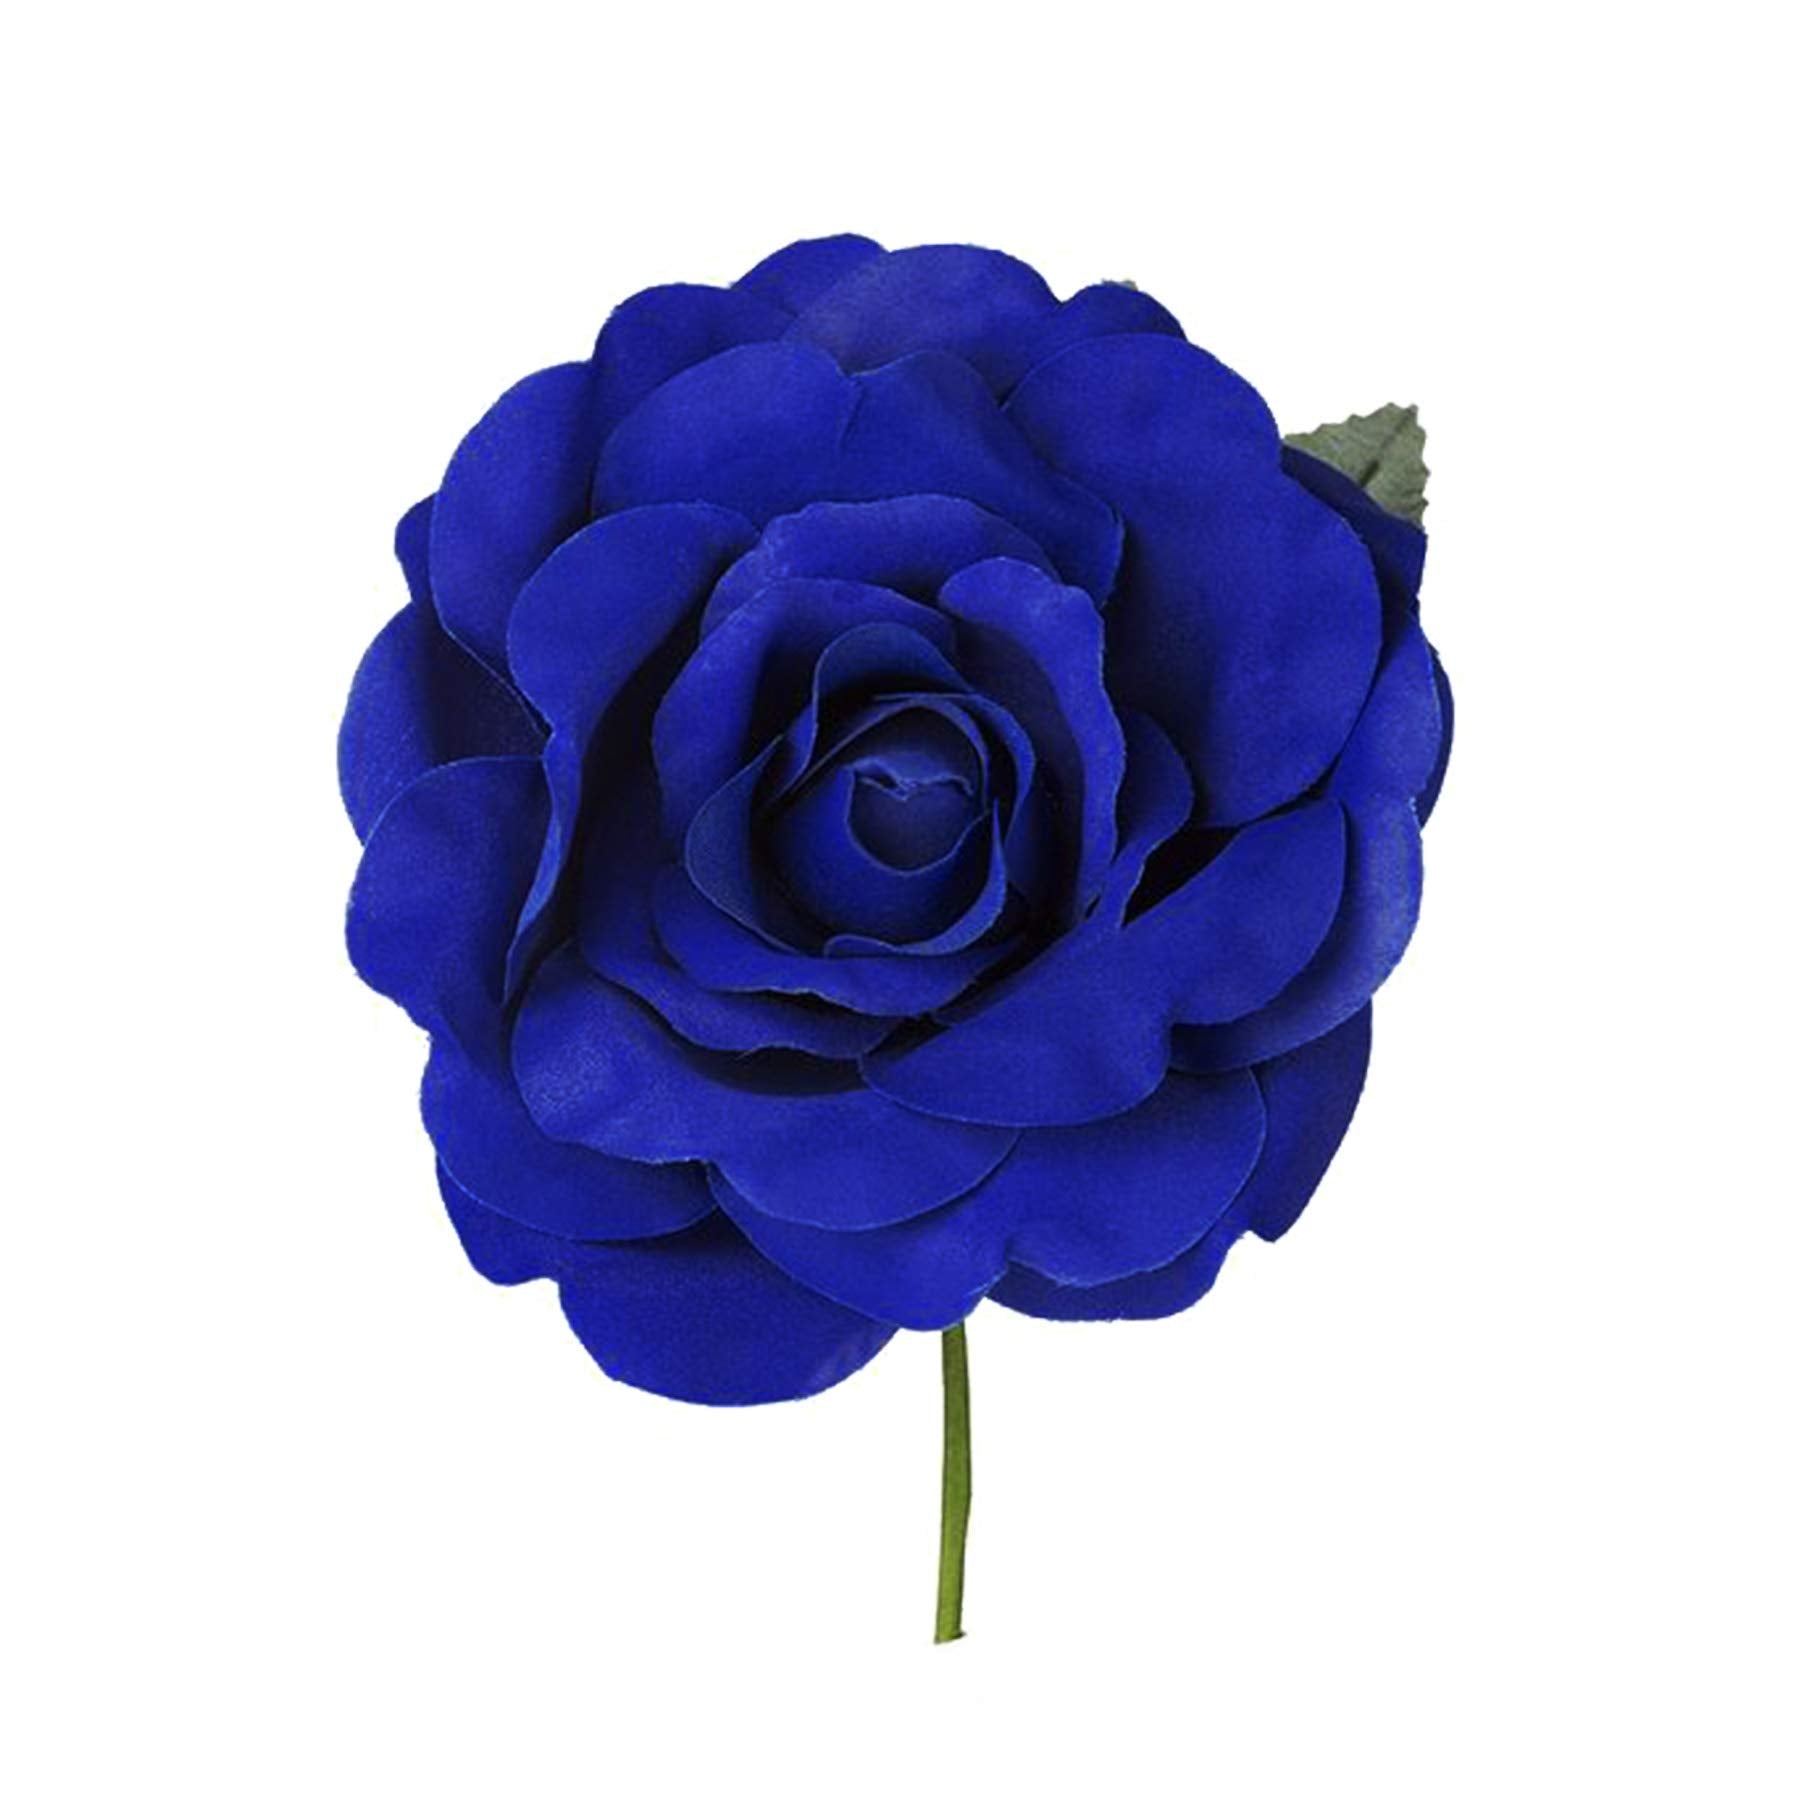 Ole Ole Flamenco Flowers for Hair Women Large Rose Big 6 Inch Handmade of Fabric Hair Pin Flamenco Dancer Blue Azul